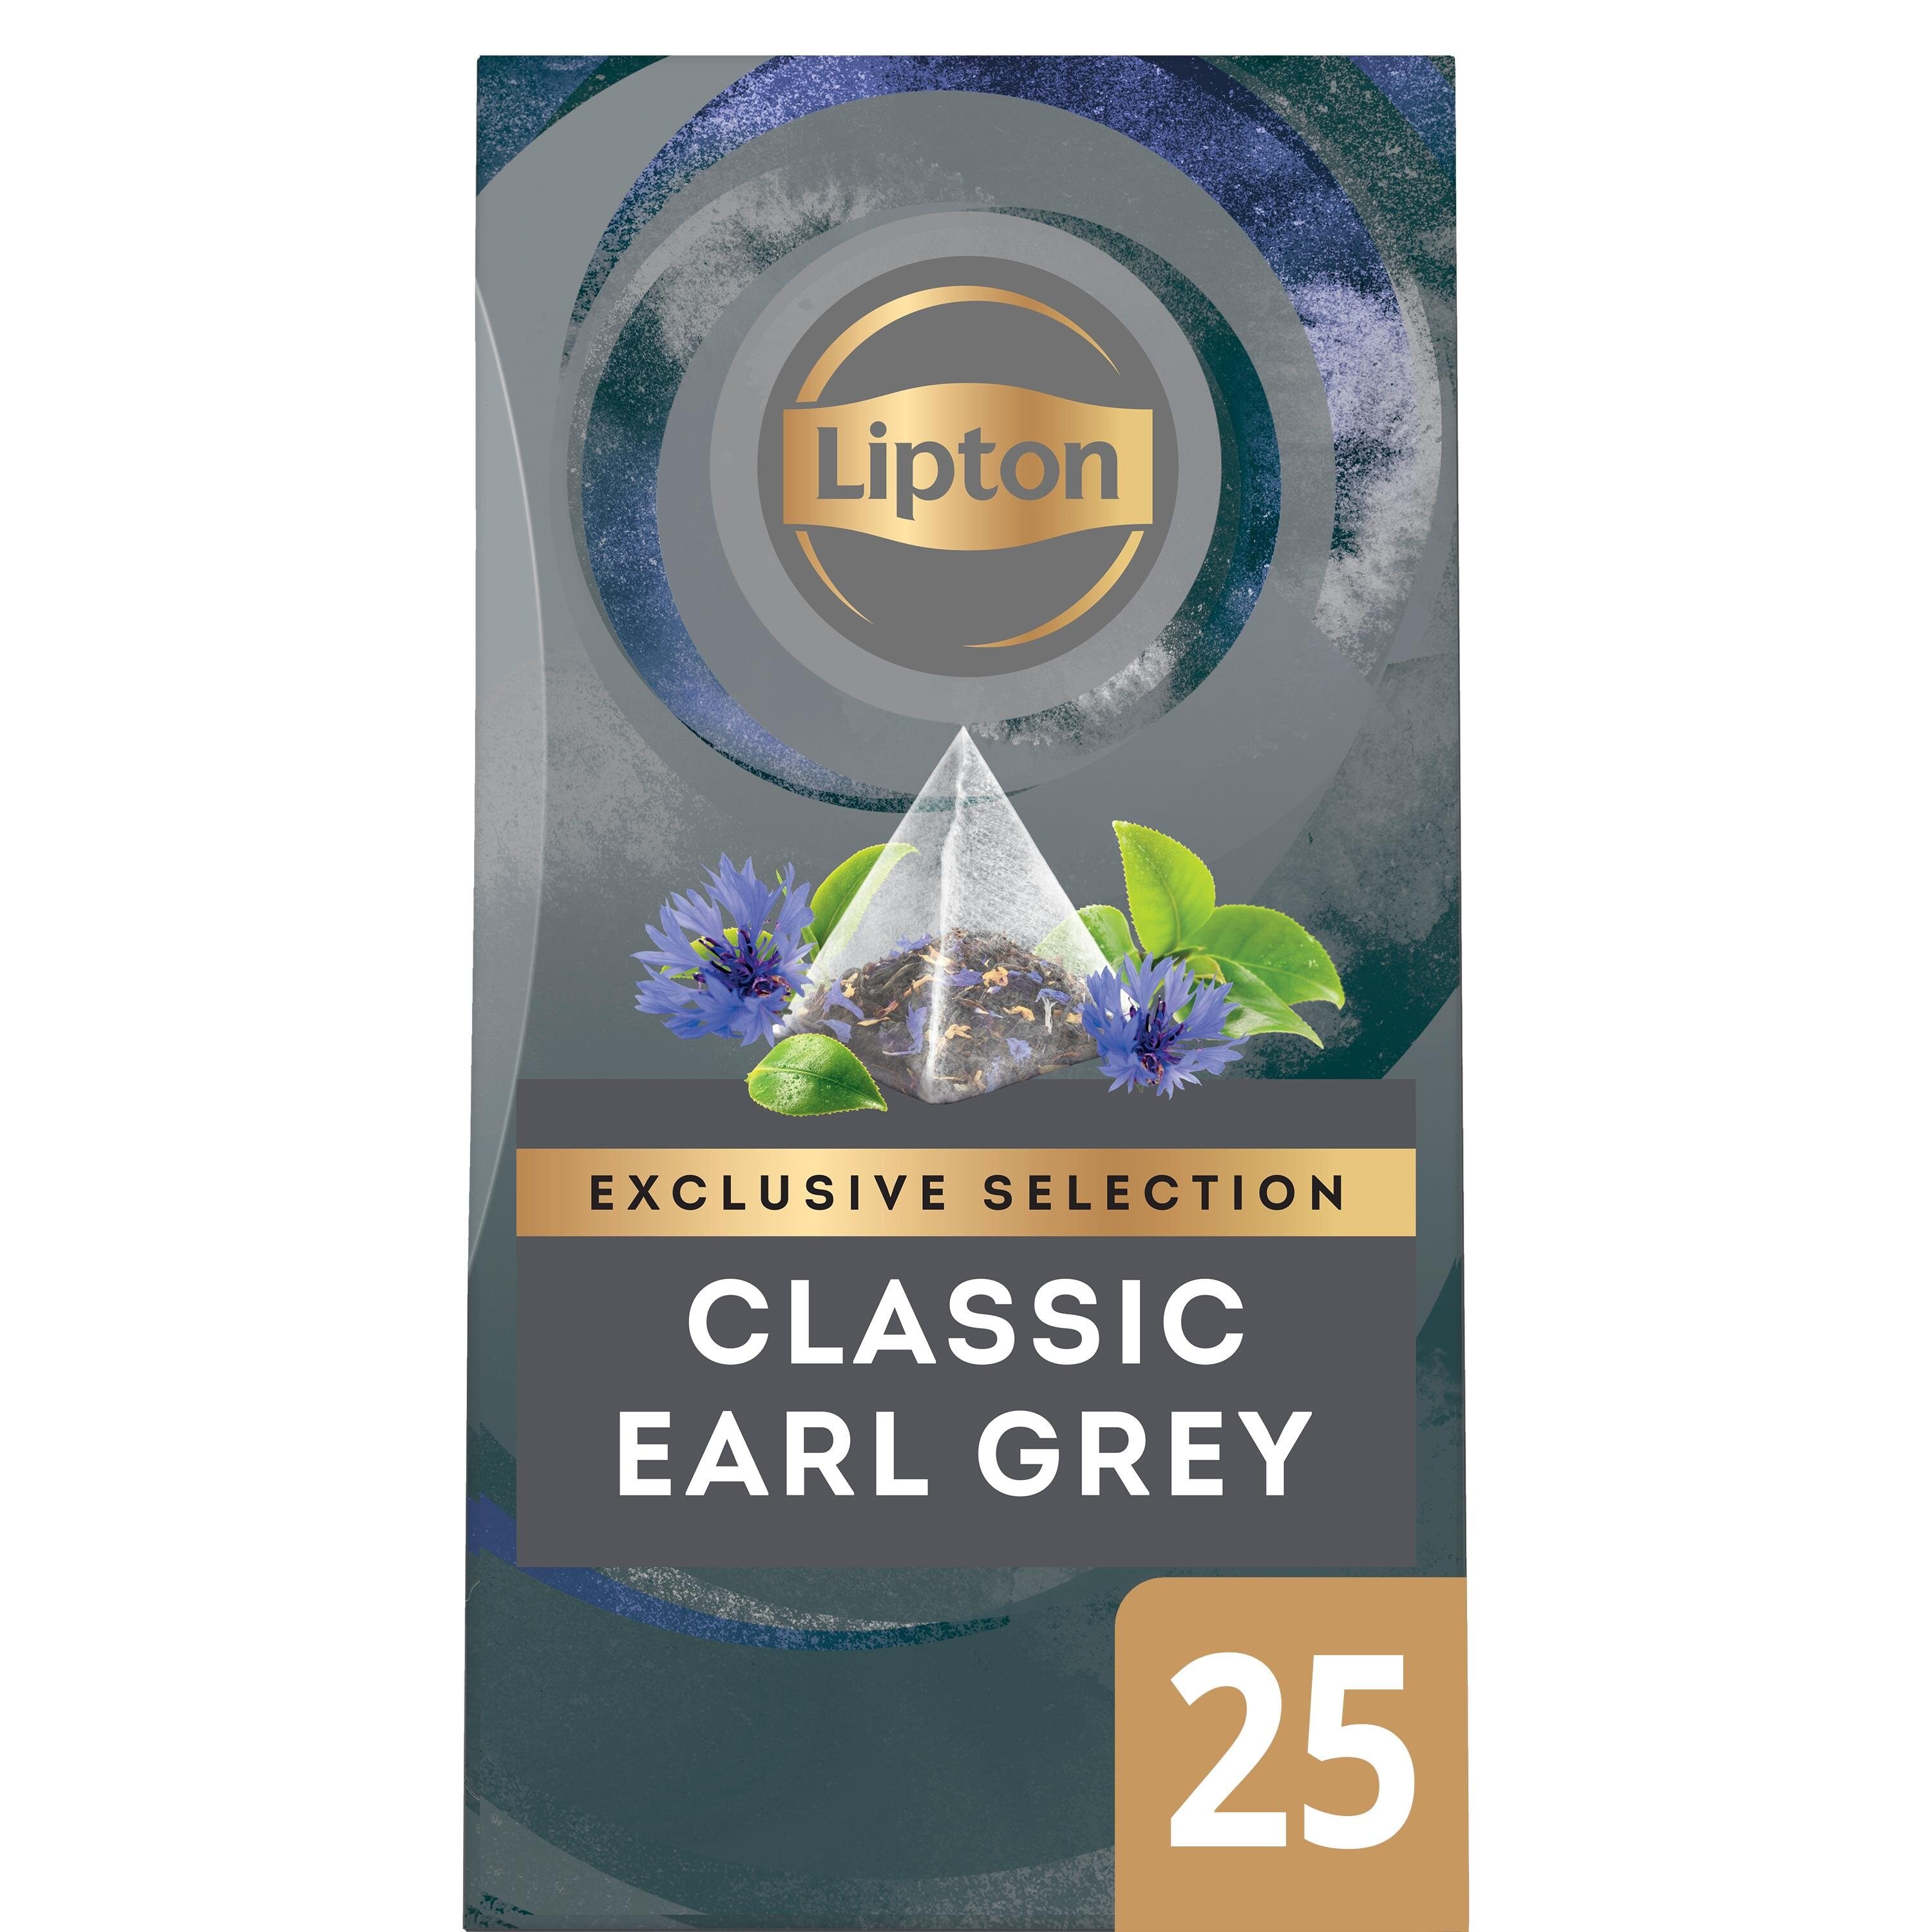 Lipton Exclusive Selection Earl Grey - 